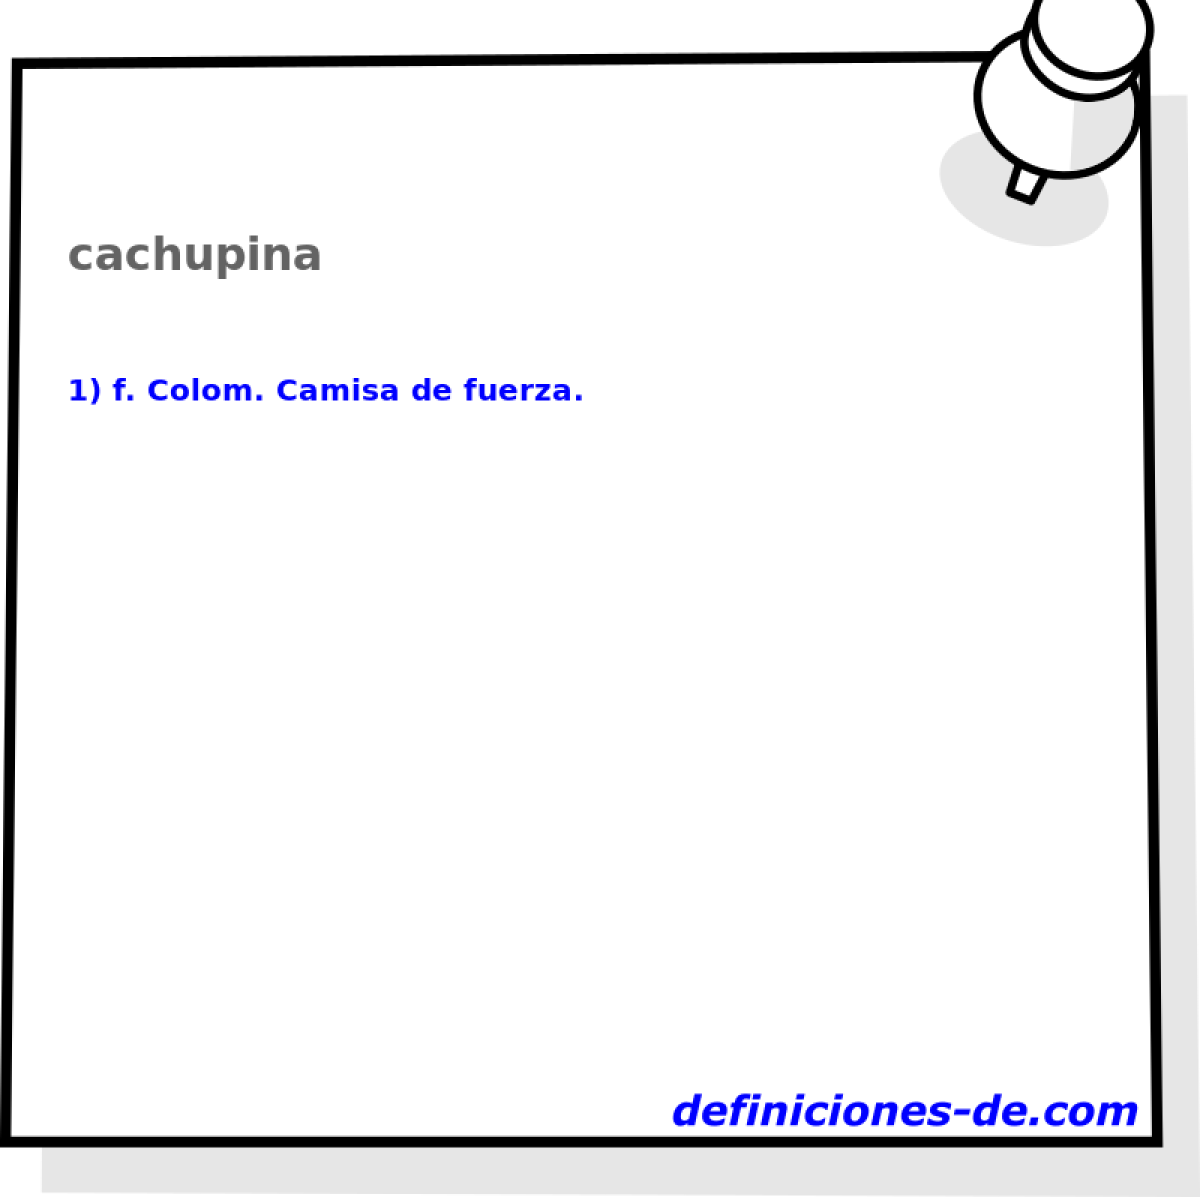 cachupina 